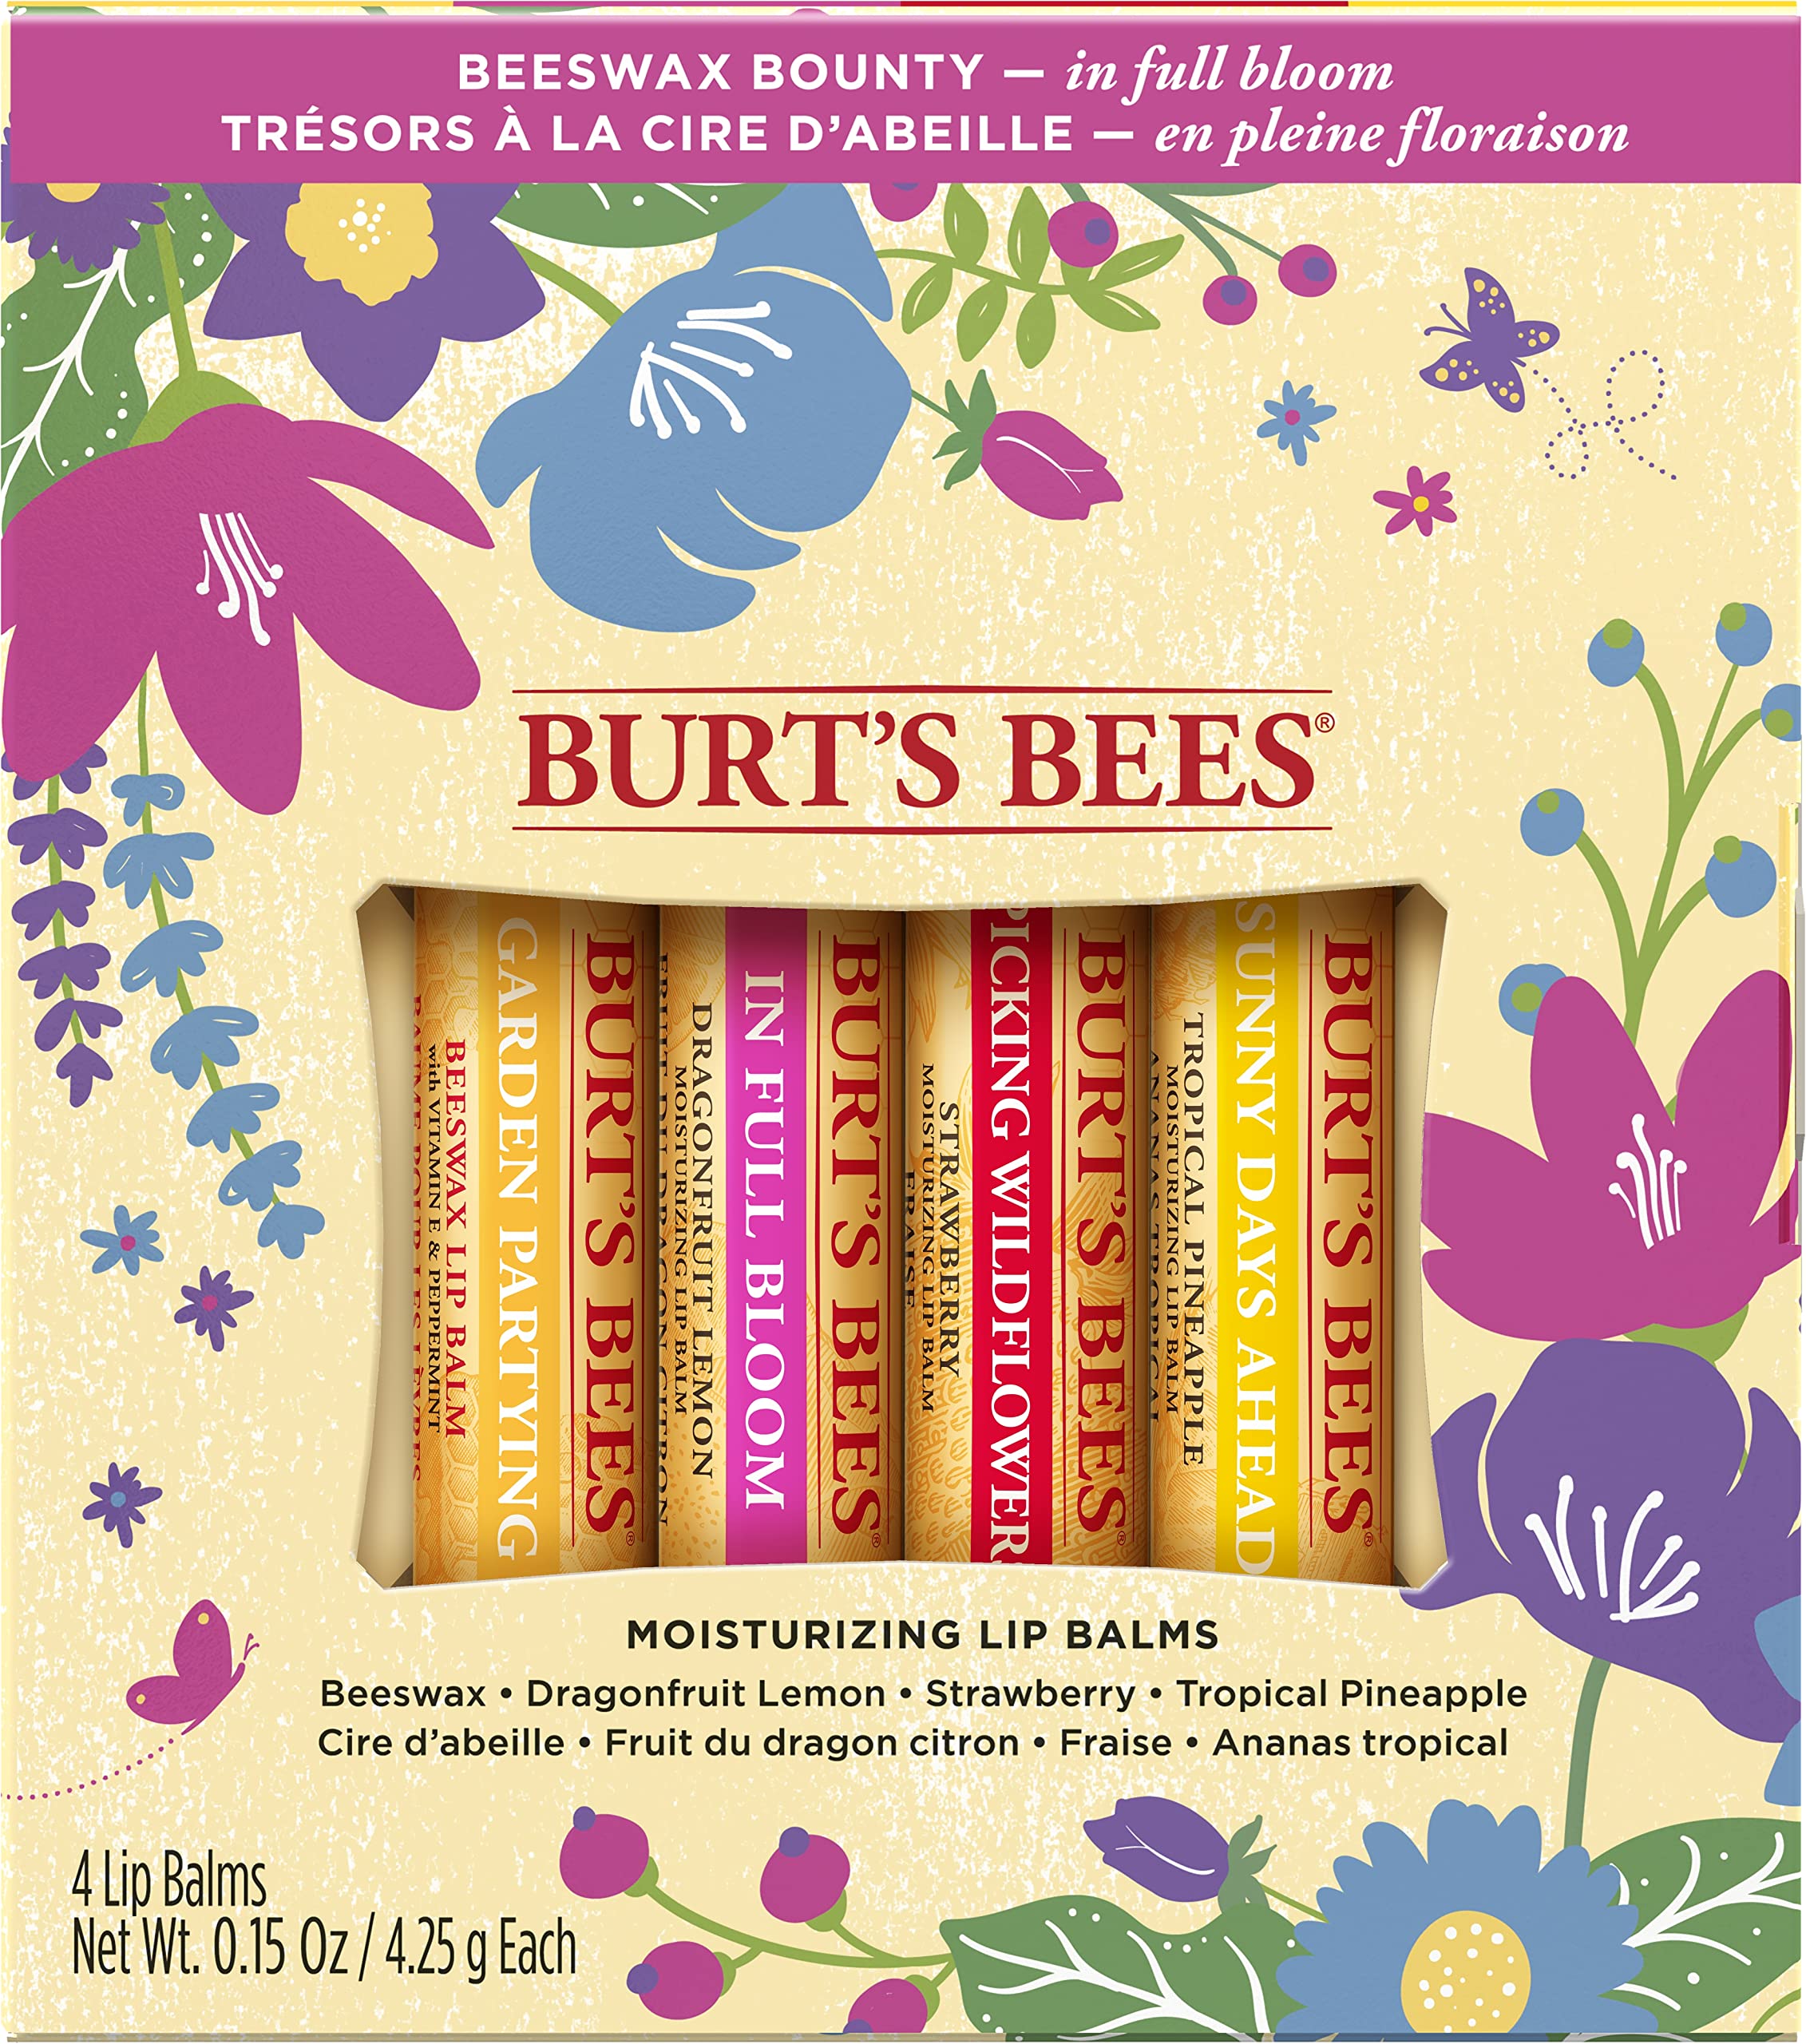 Burt's Bees Beeswax Lip Balm, 4 ct - City Market